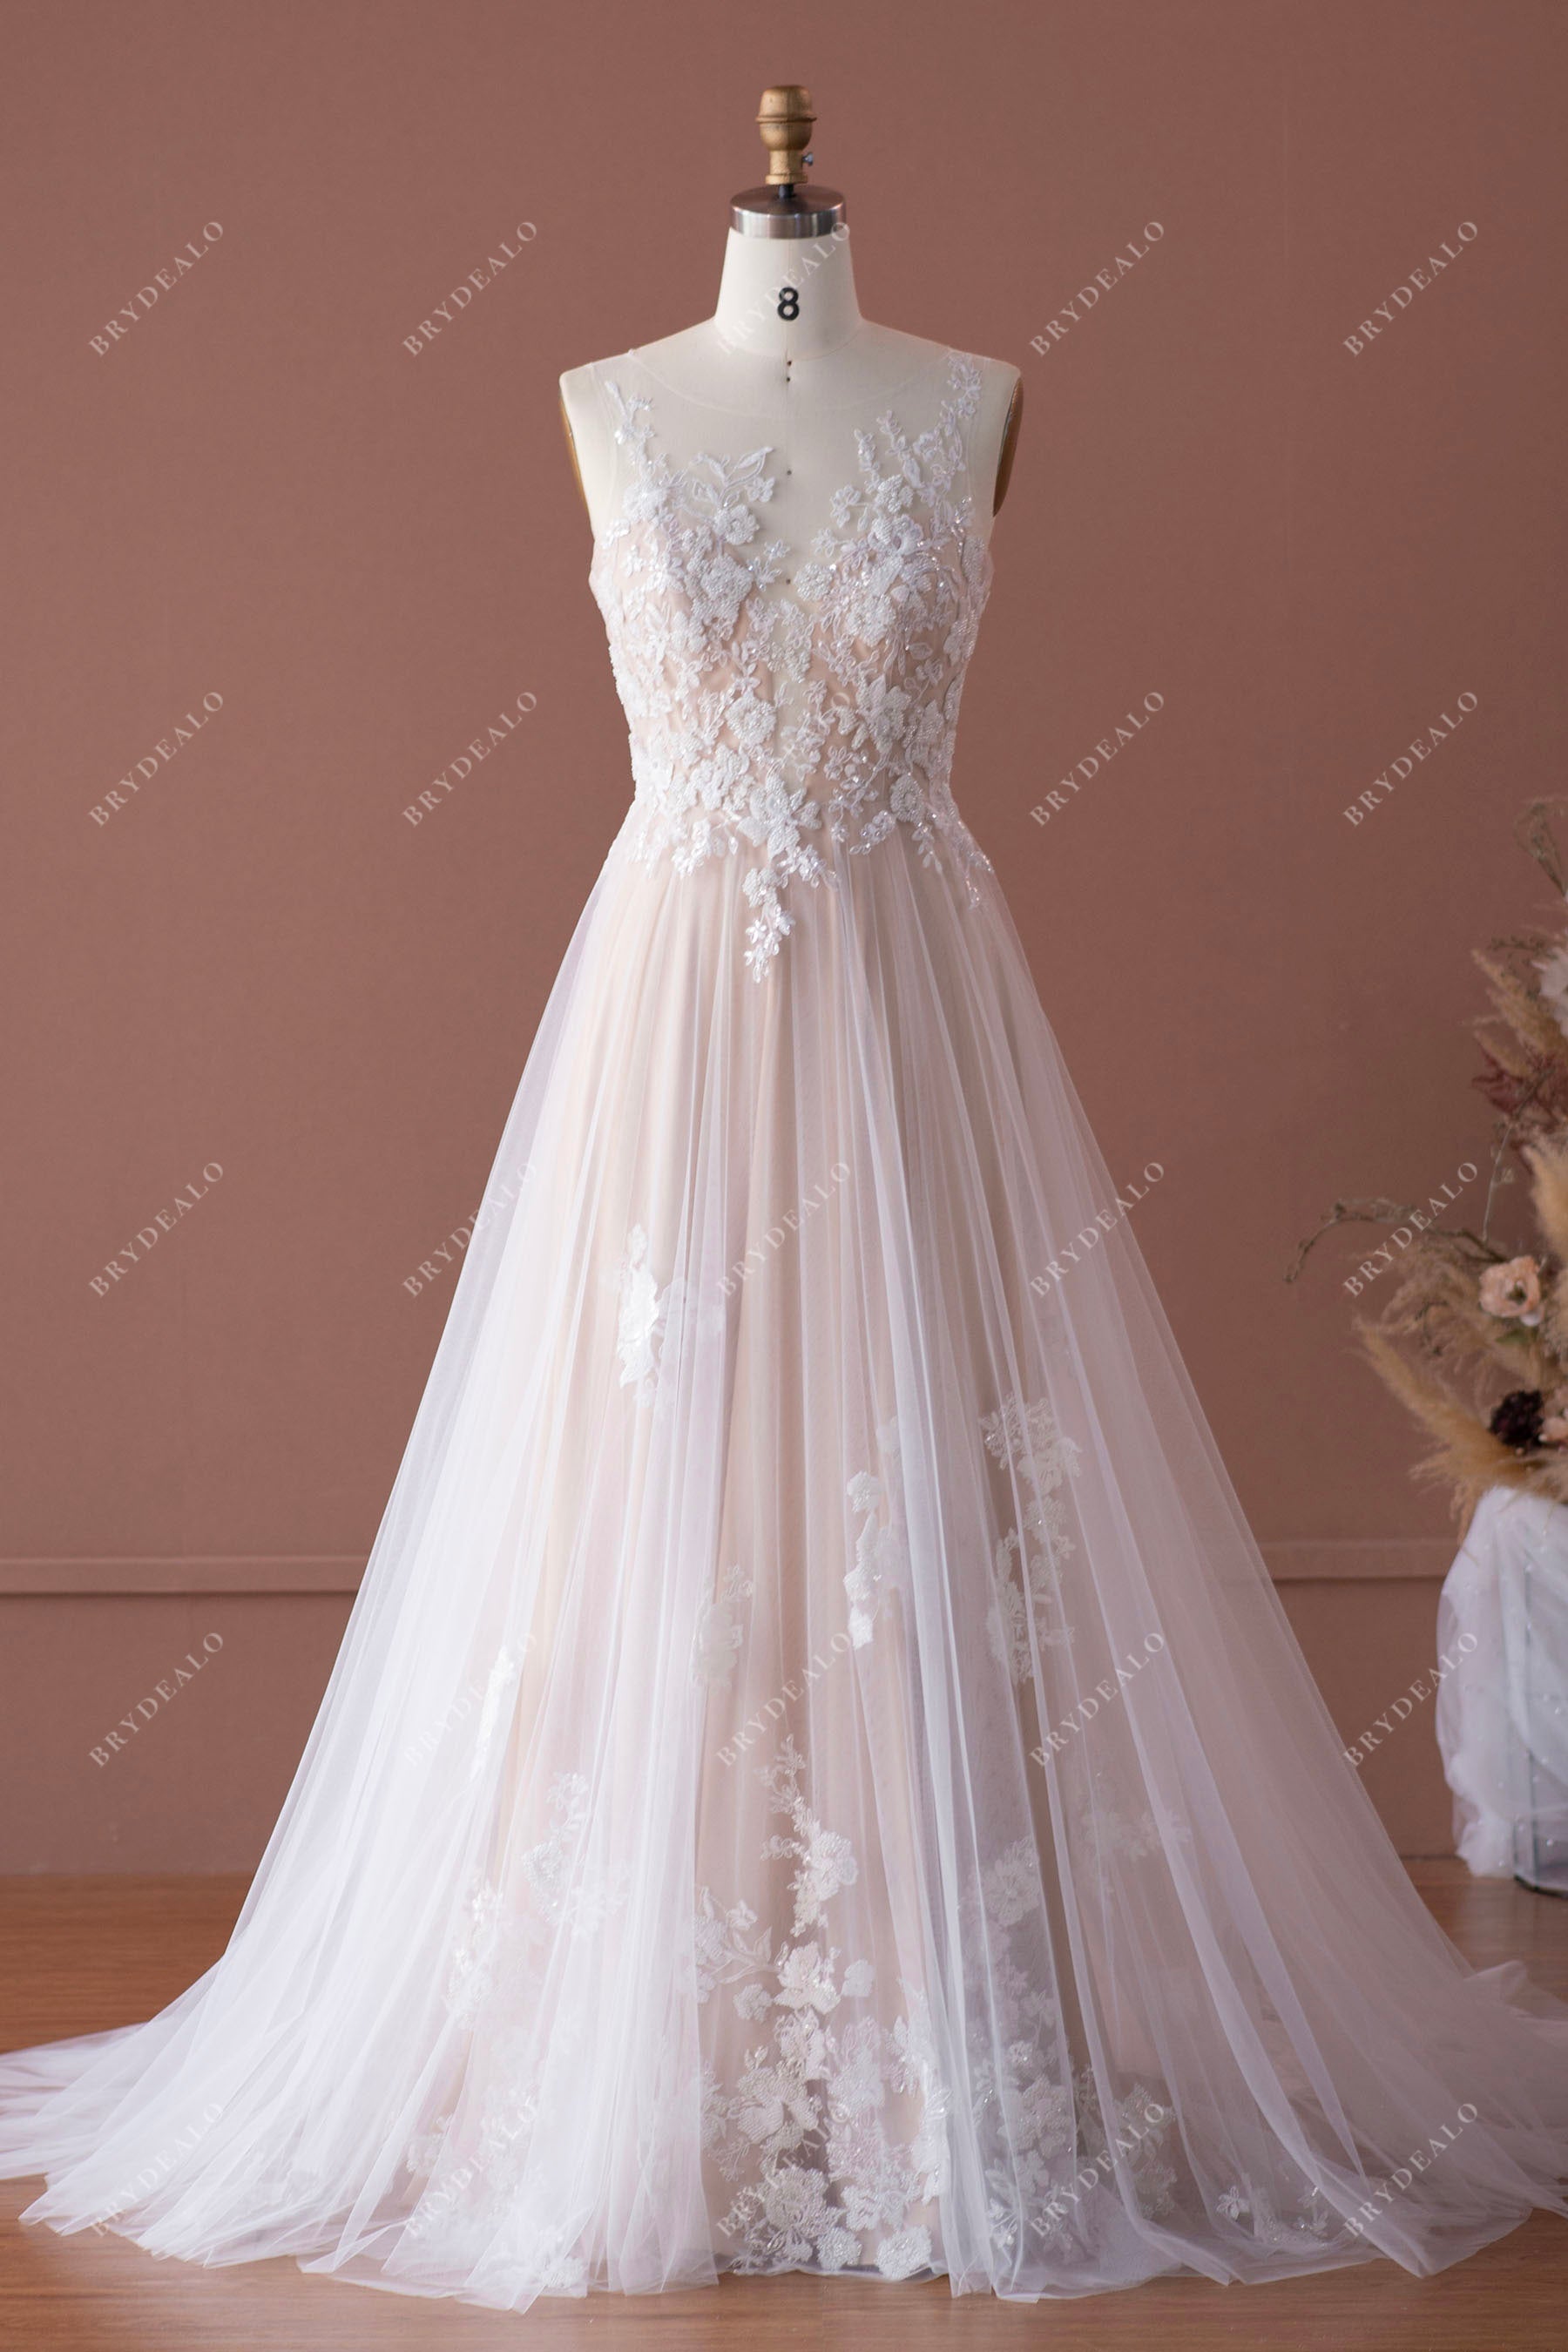 Romantic Lace Illusion Neck nude beige A-line Wedding Dress